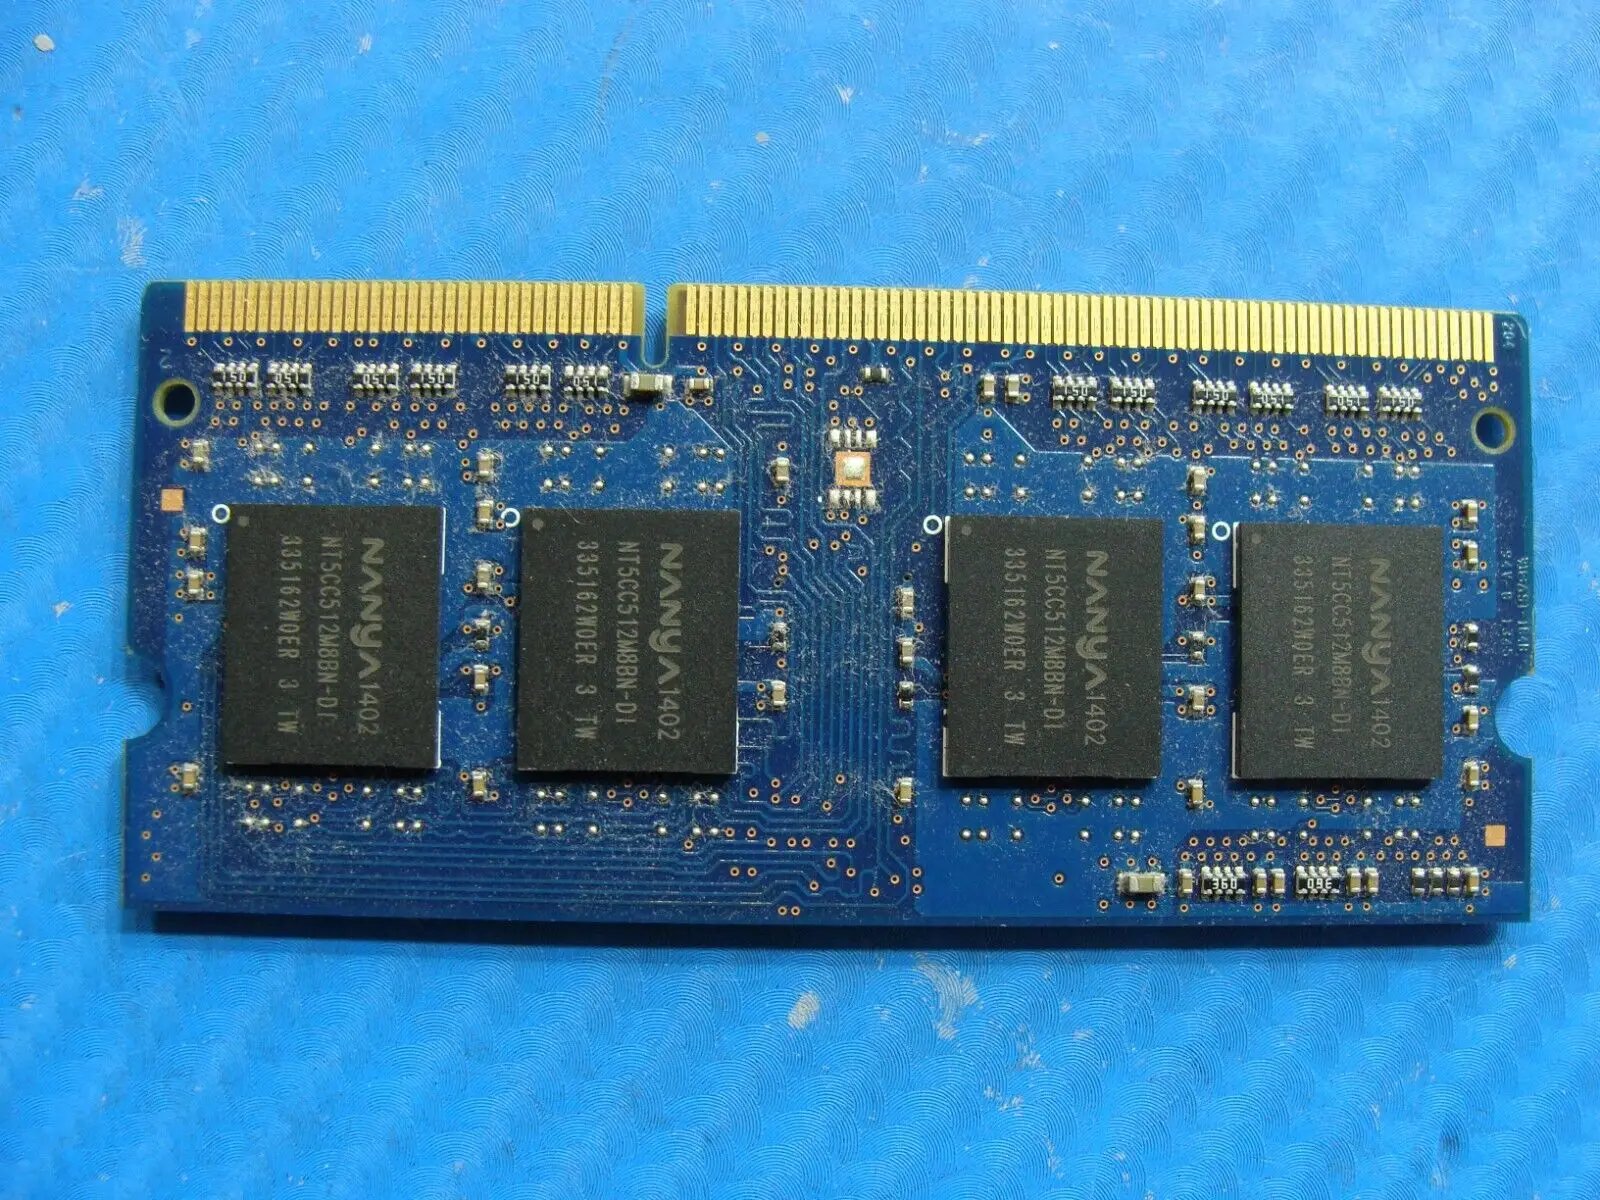 Dell E6430 Nanya 4GB 1Rx8 PC3L-12800S Memory RAM SO-DIMM NT4GC64C88B1NS-DI